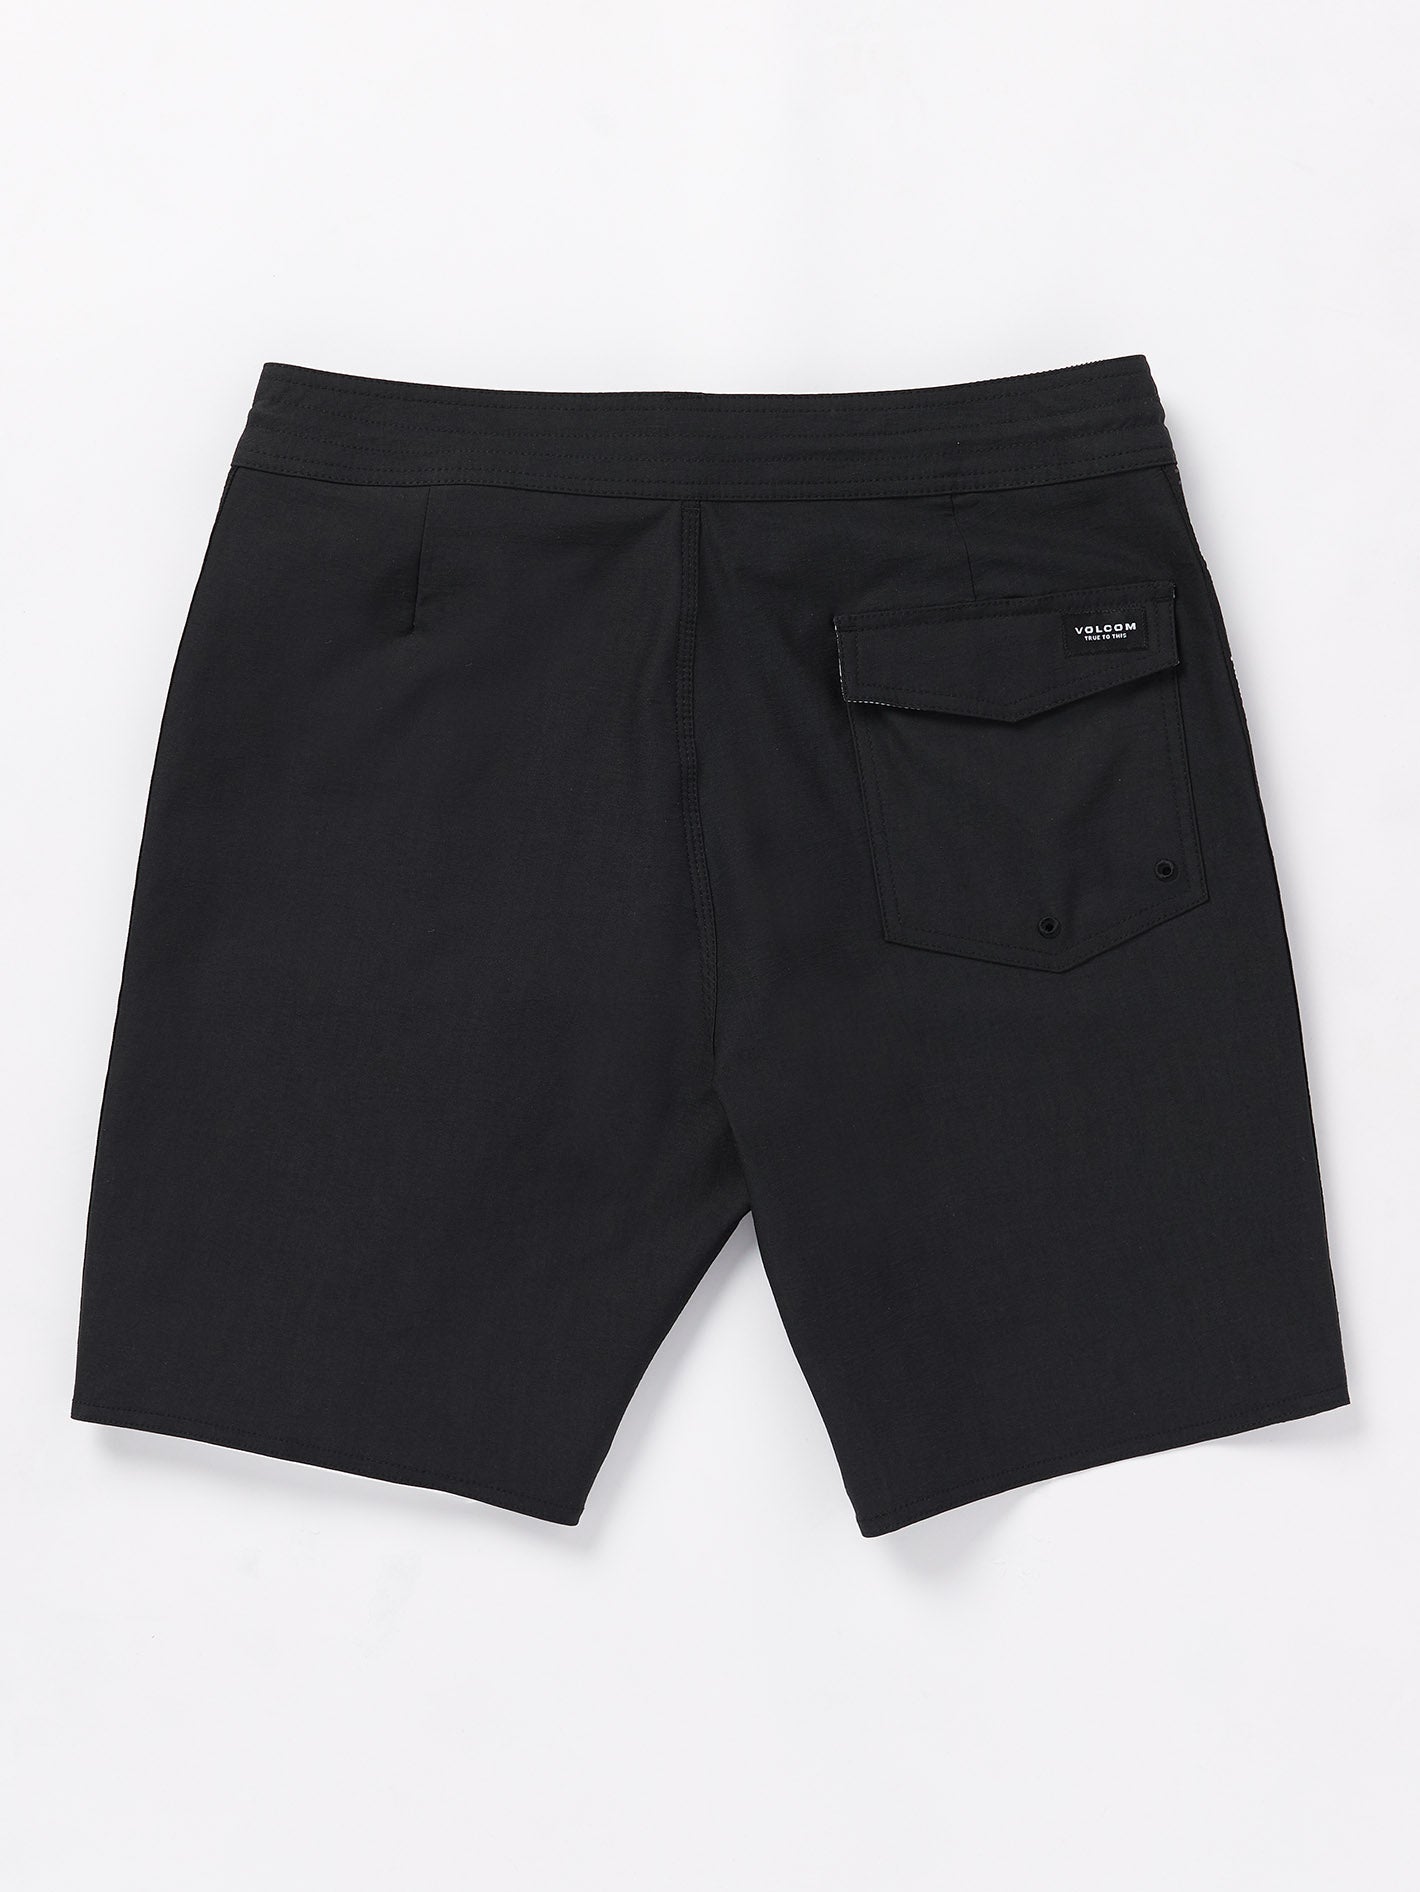 Black 'Avery' sweatpants MARANT - IetpShops Malta - Zone3 RX3 Compression  Shorts